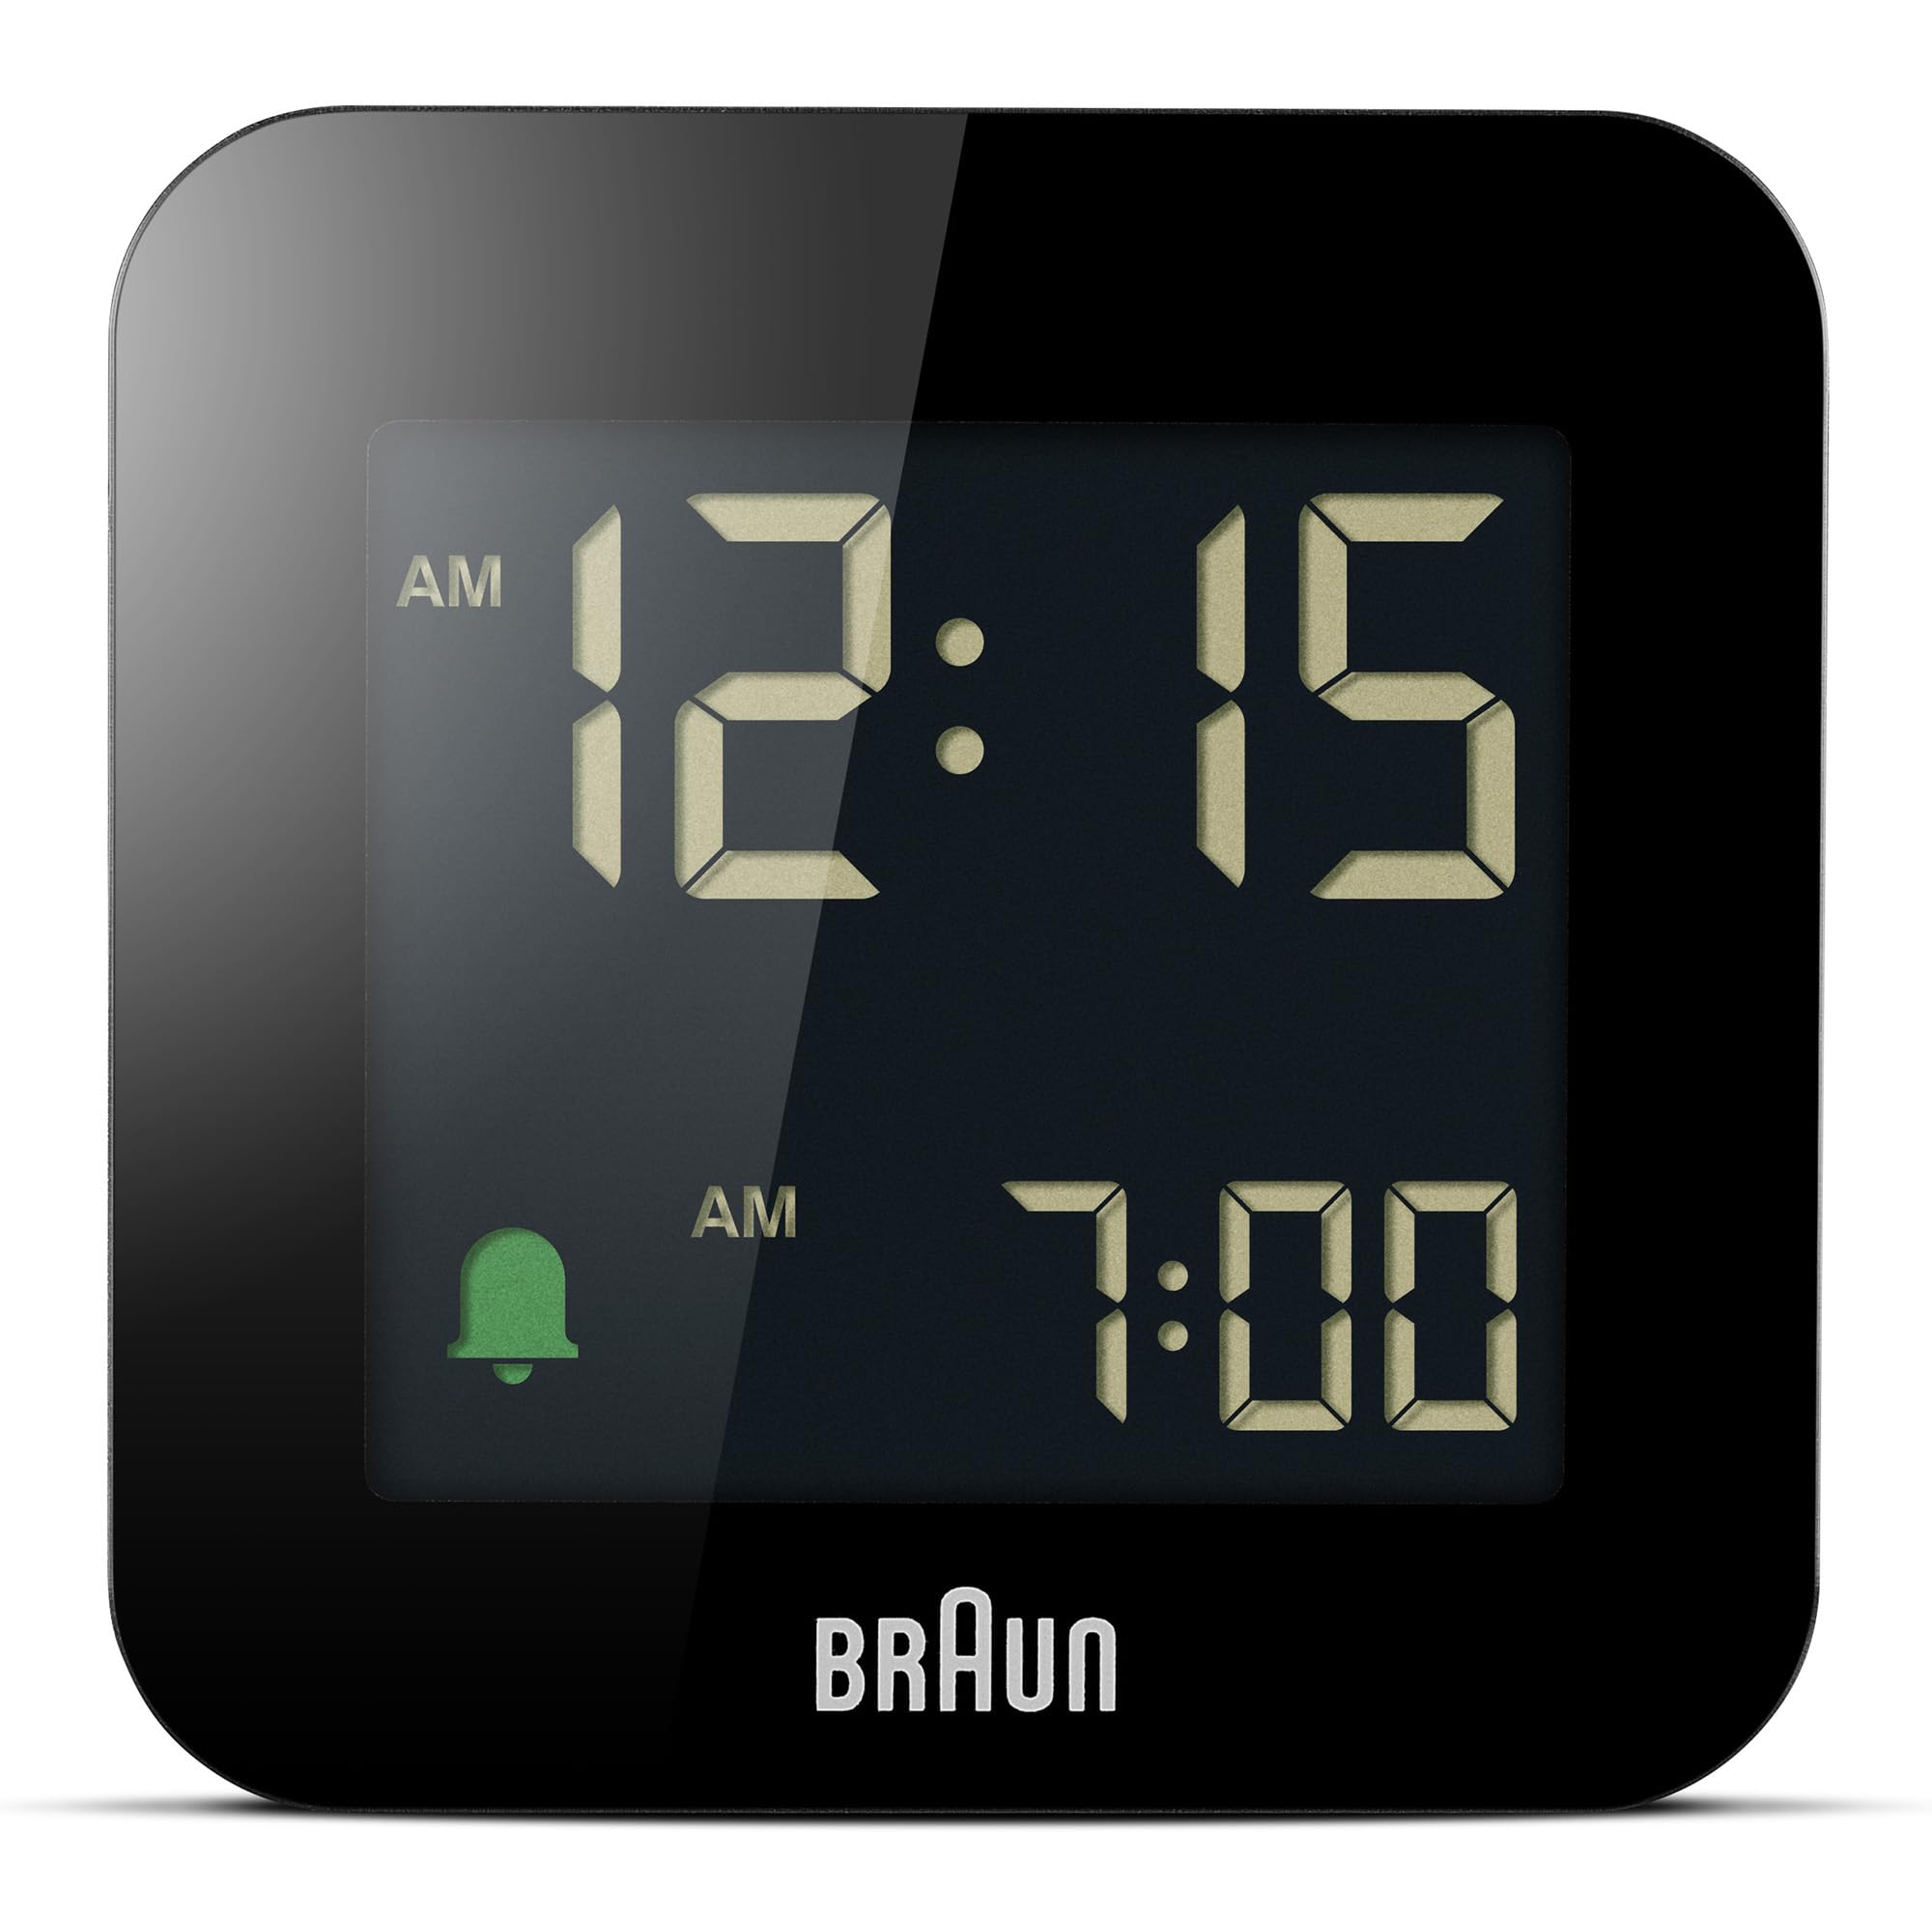 Braun Digital Travel Alarm Clock with Snooze